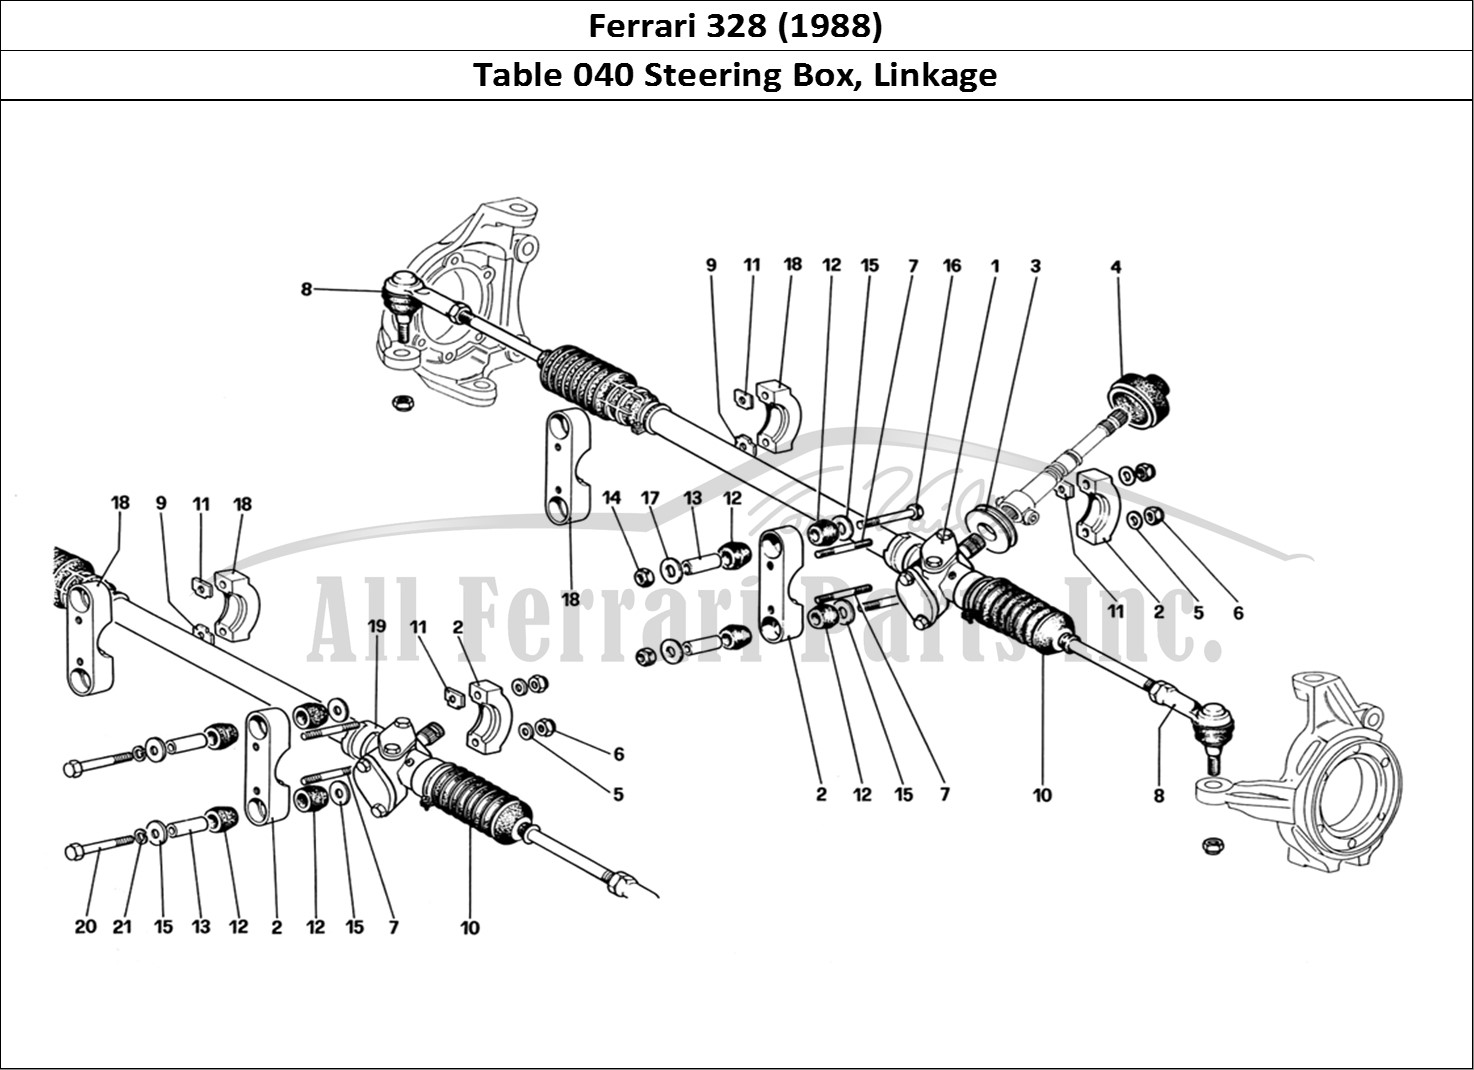 Ferrari Parts Ferrari 328 (1988) Page 040 Steering Box and Linkage